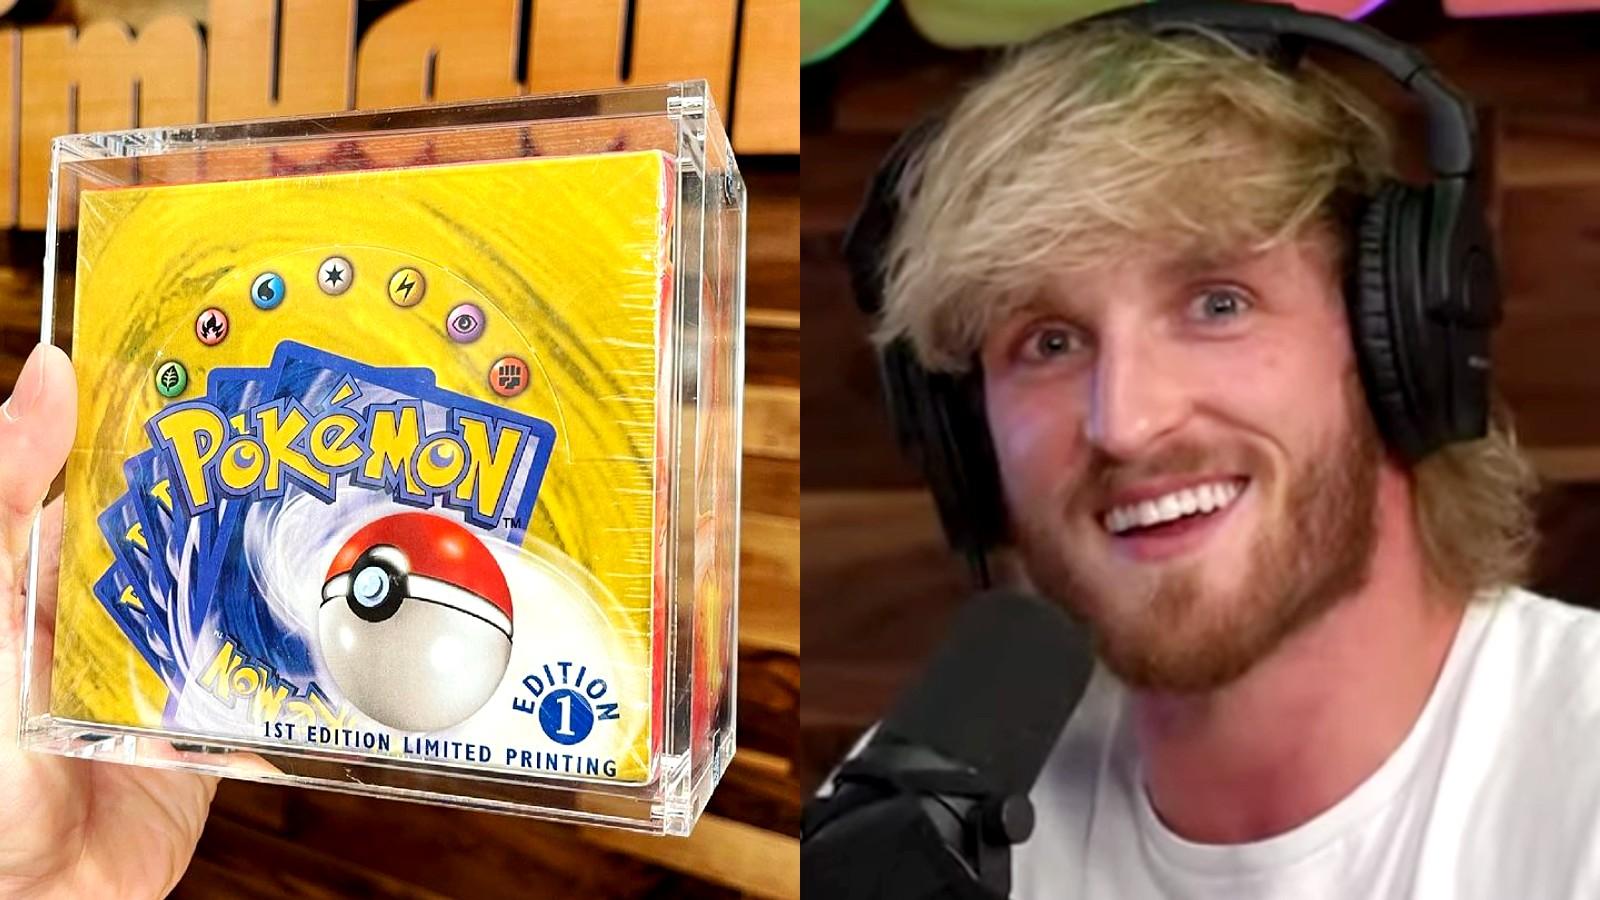 Logan Paul next to Pokemon card box